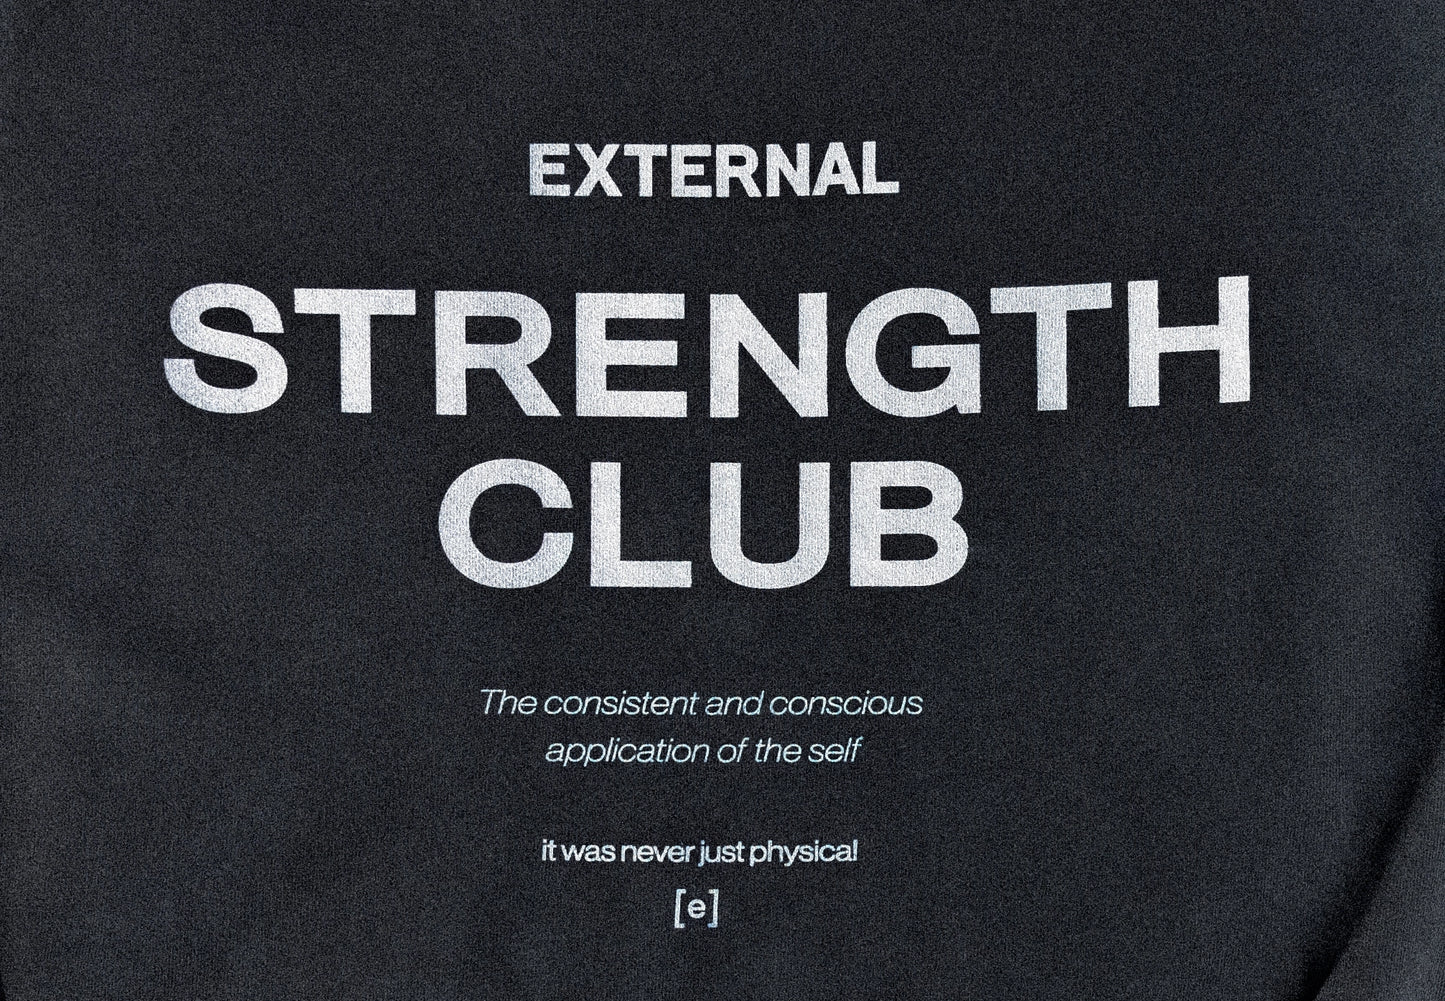 Strength Club Sweatshirt